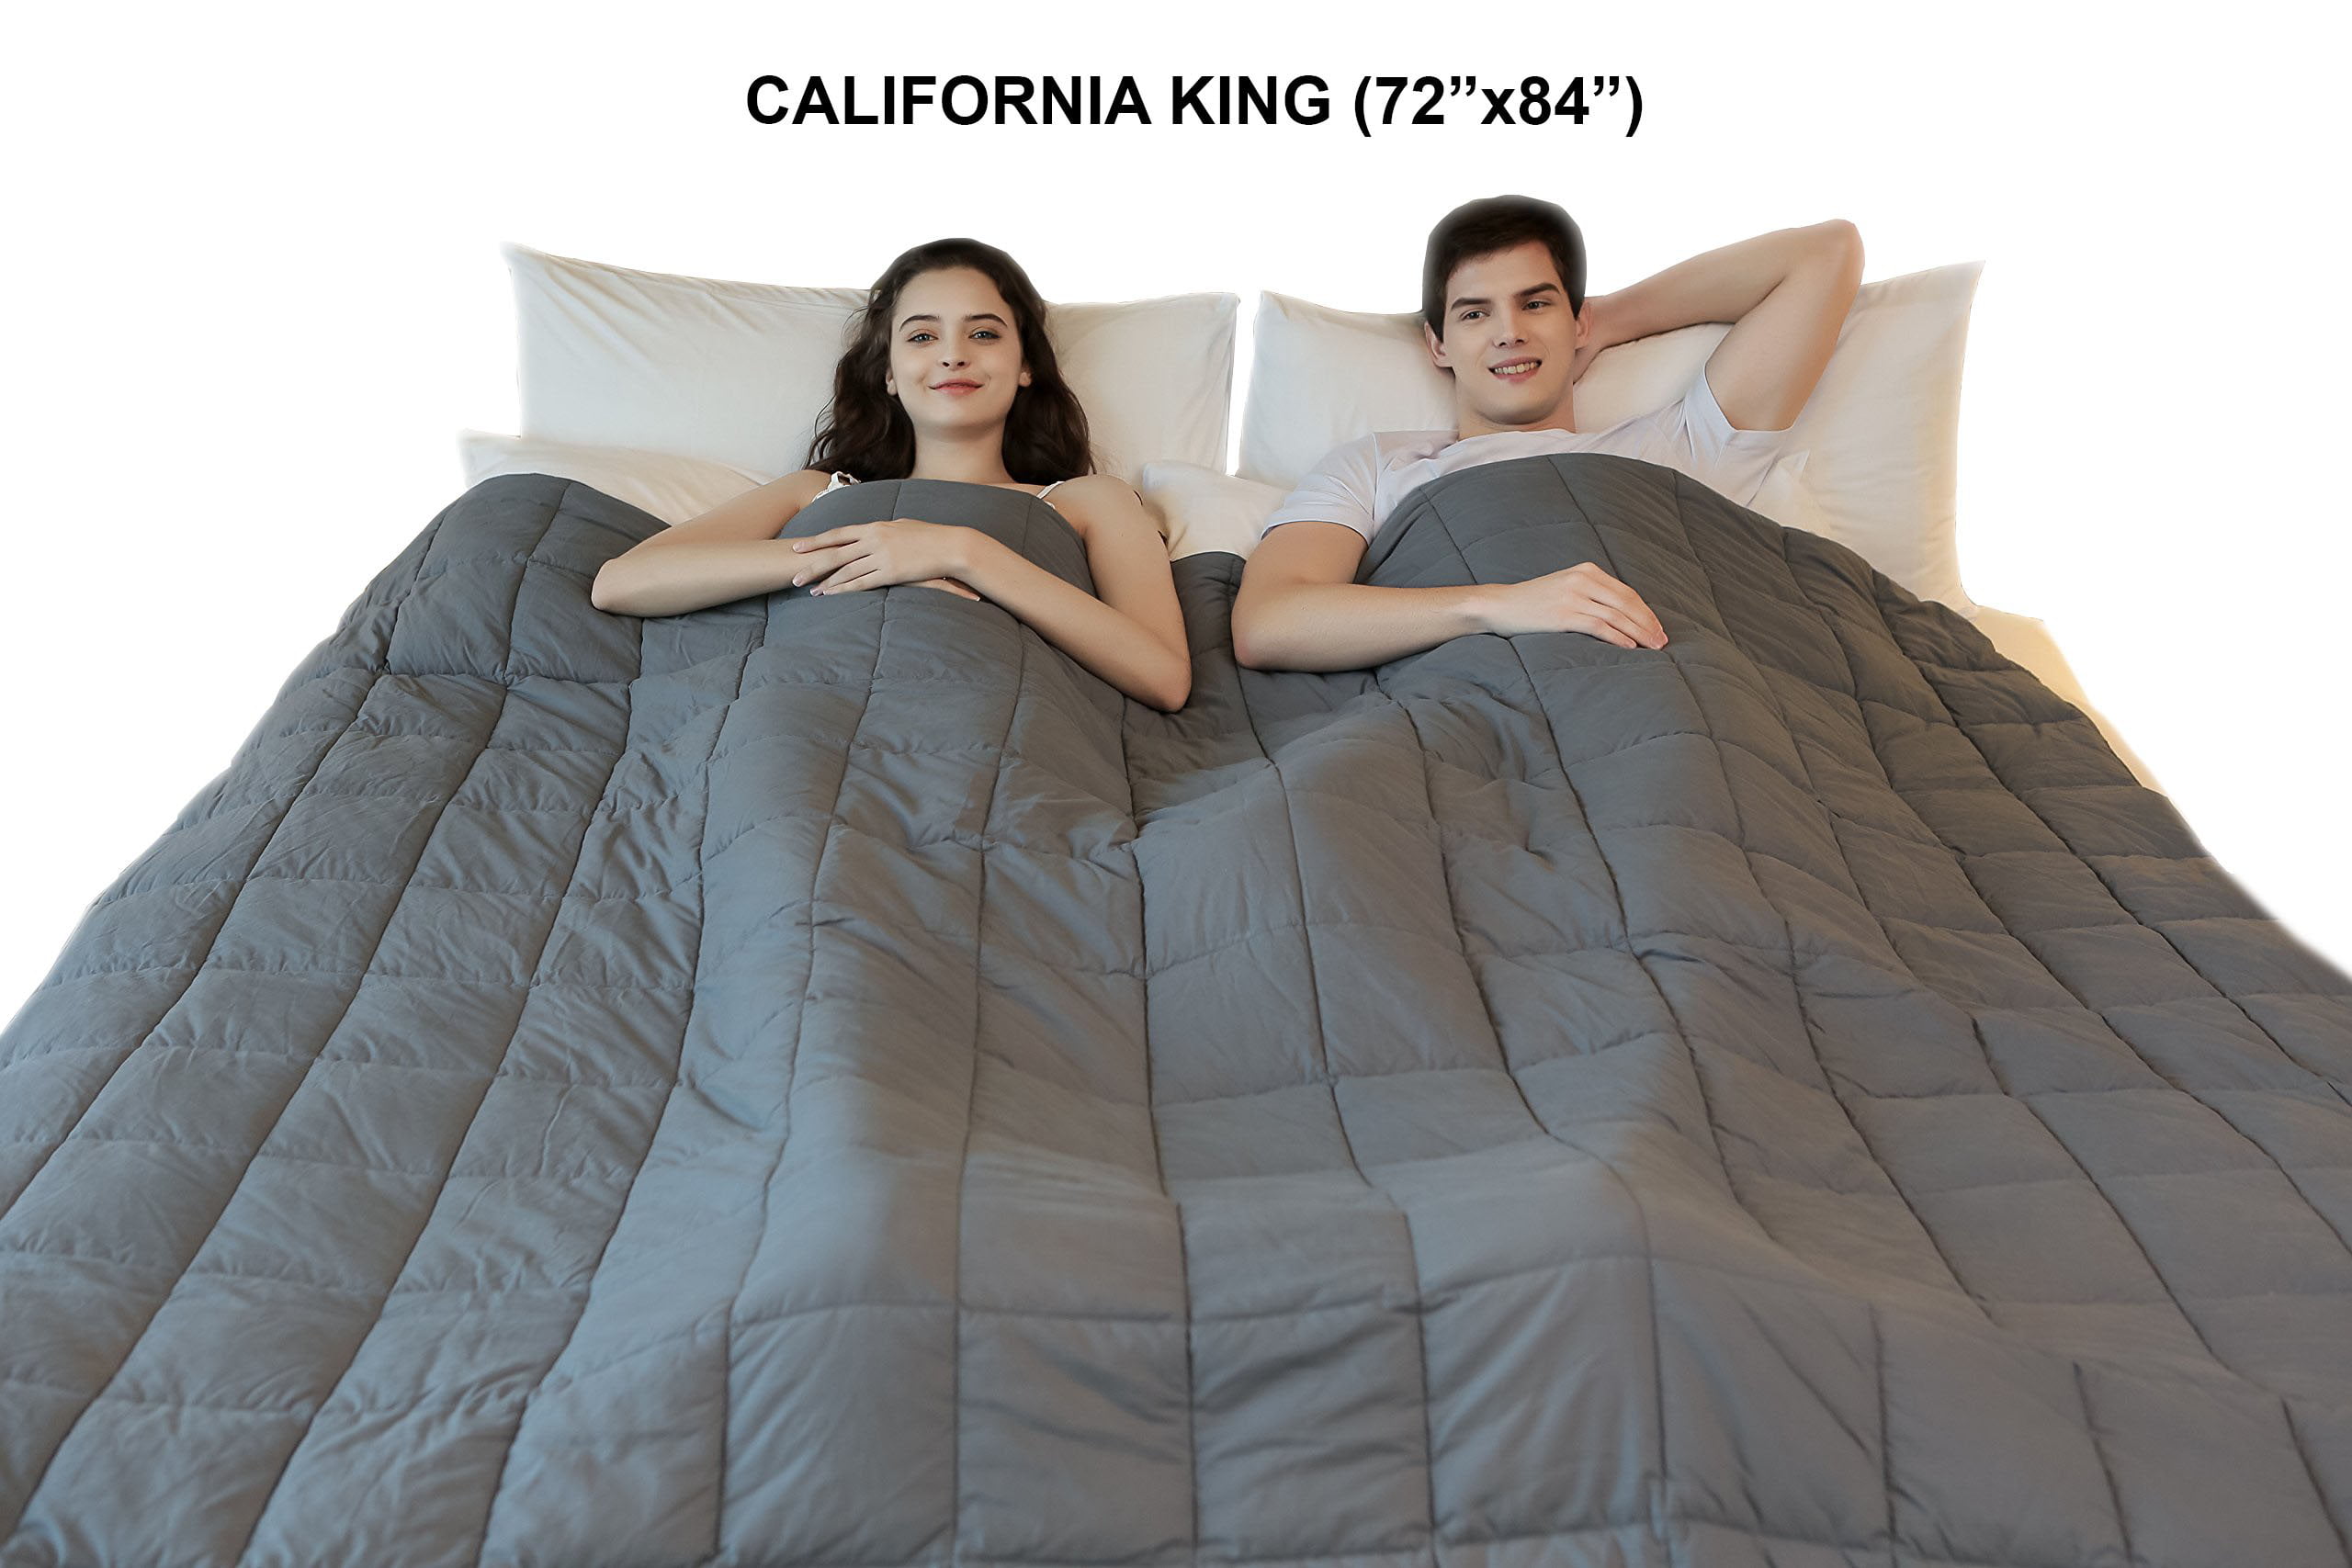 California King Sized Weighted Blanket Soft Weighted Throw Blanket Heavy Weighted Blanket Cuddle Sensation Blanket 72x84 Walmartcom Walmartcom